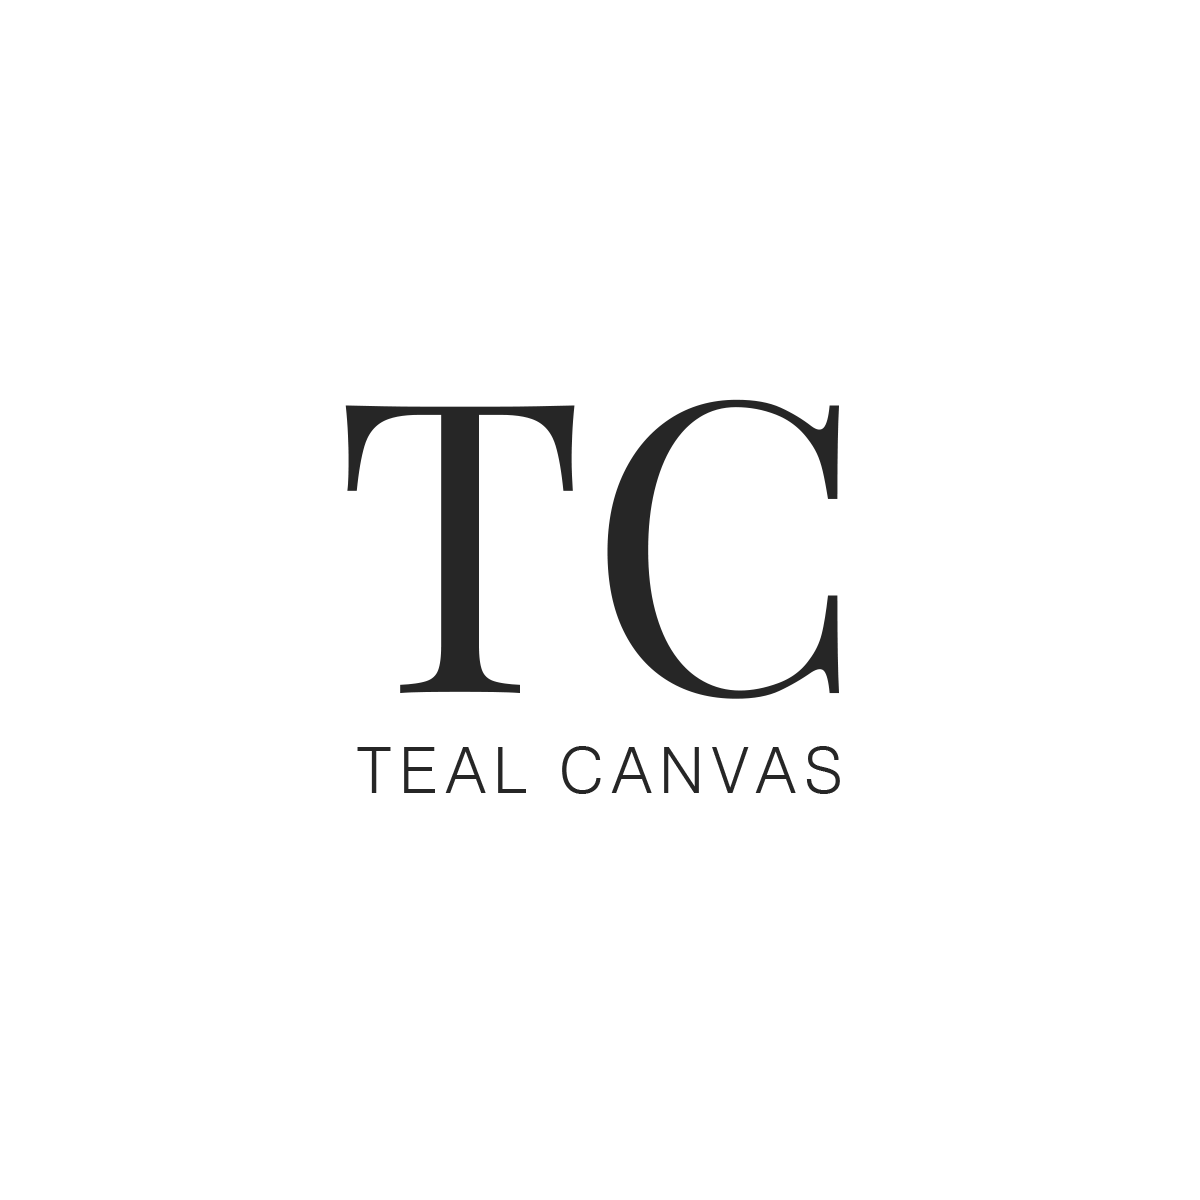 Teal Canvas Logo